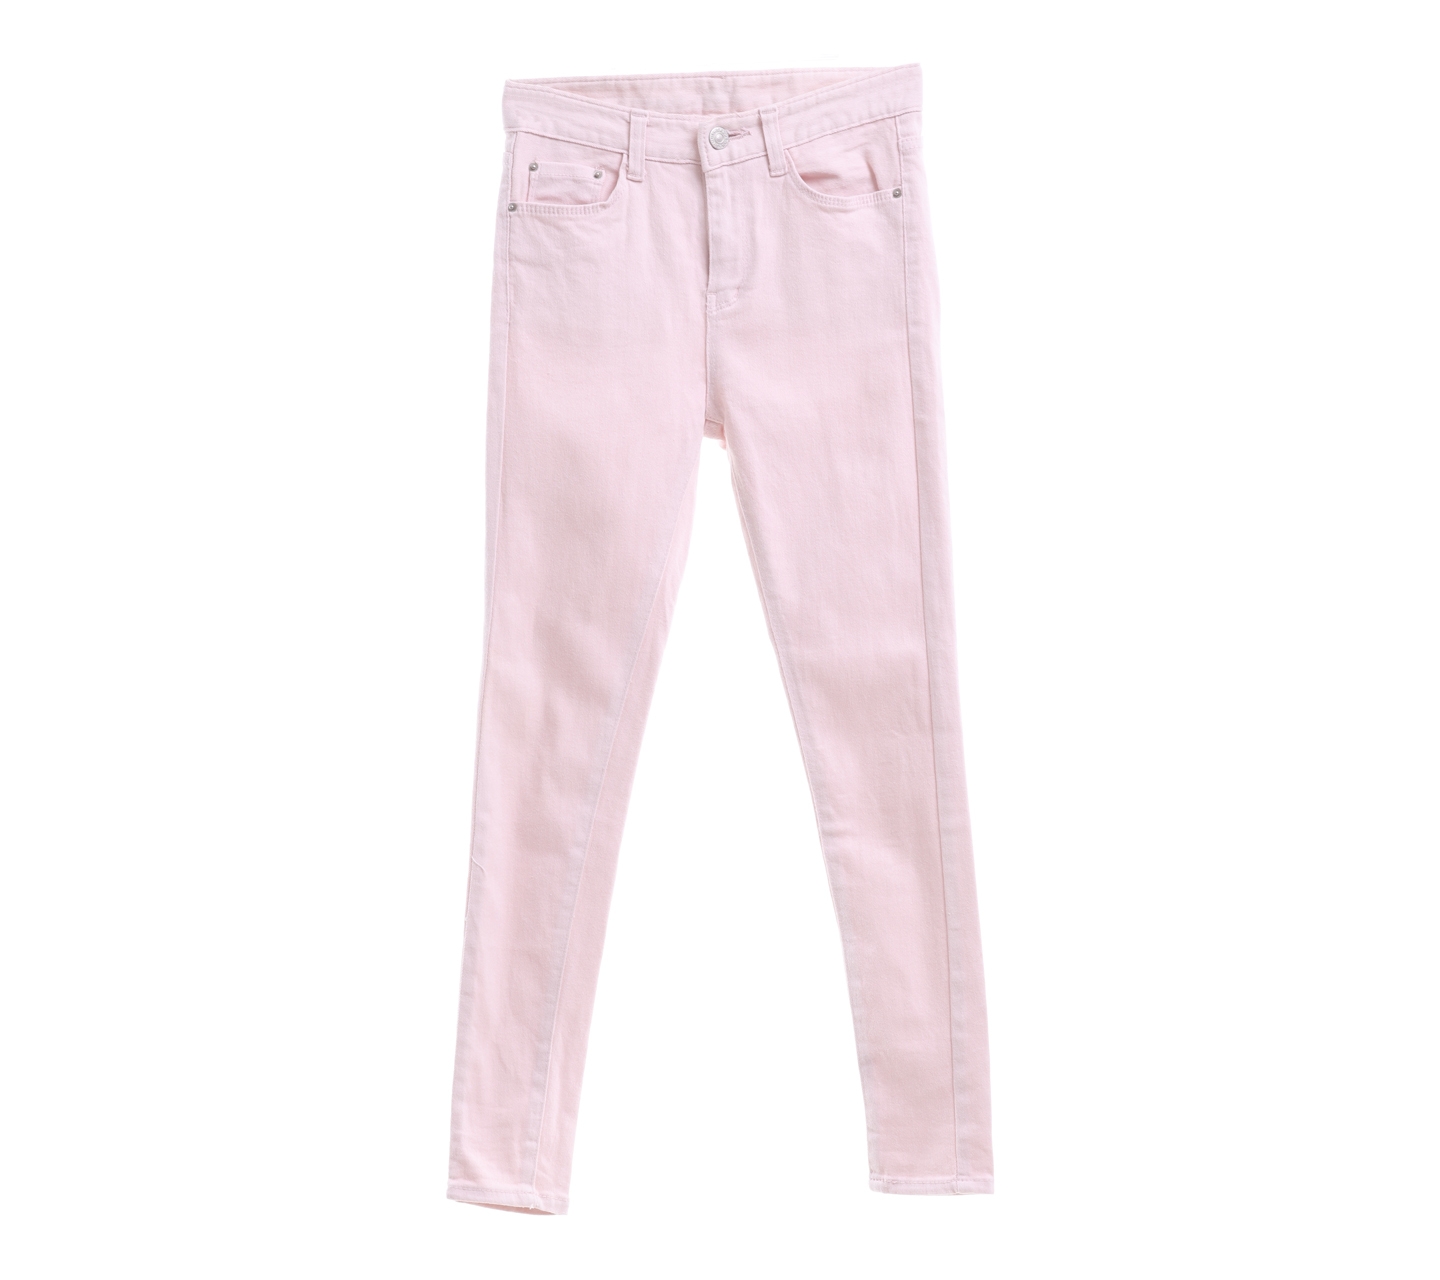 Chuu Jeans Soft Pink Long Pants